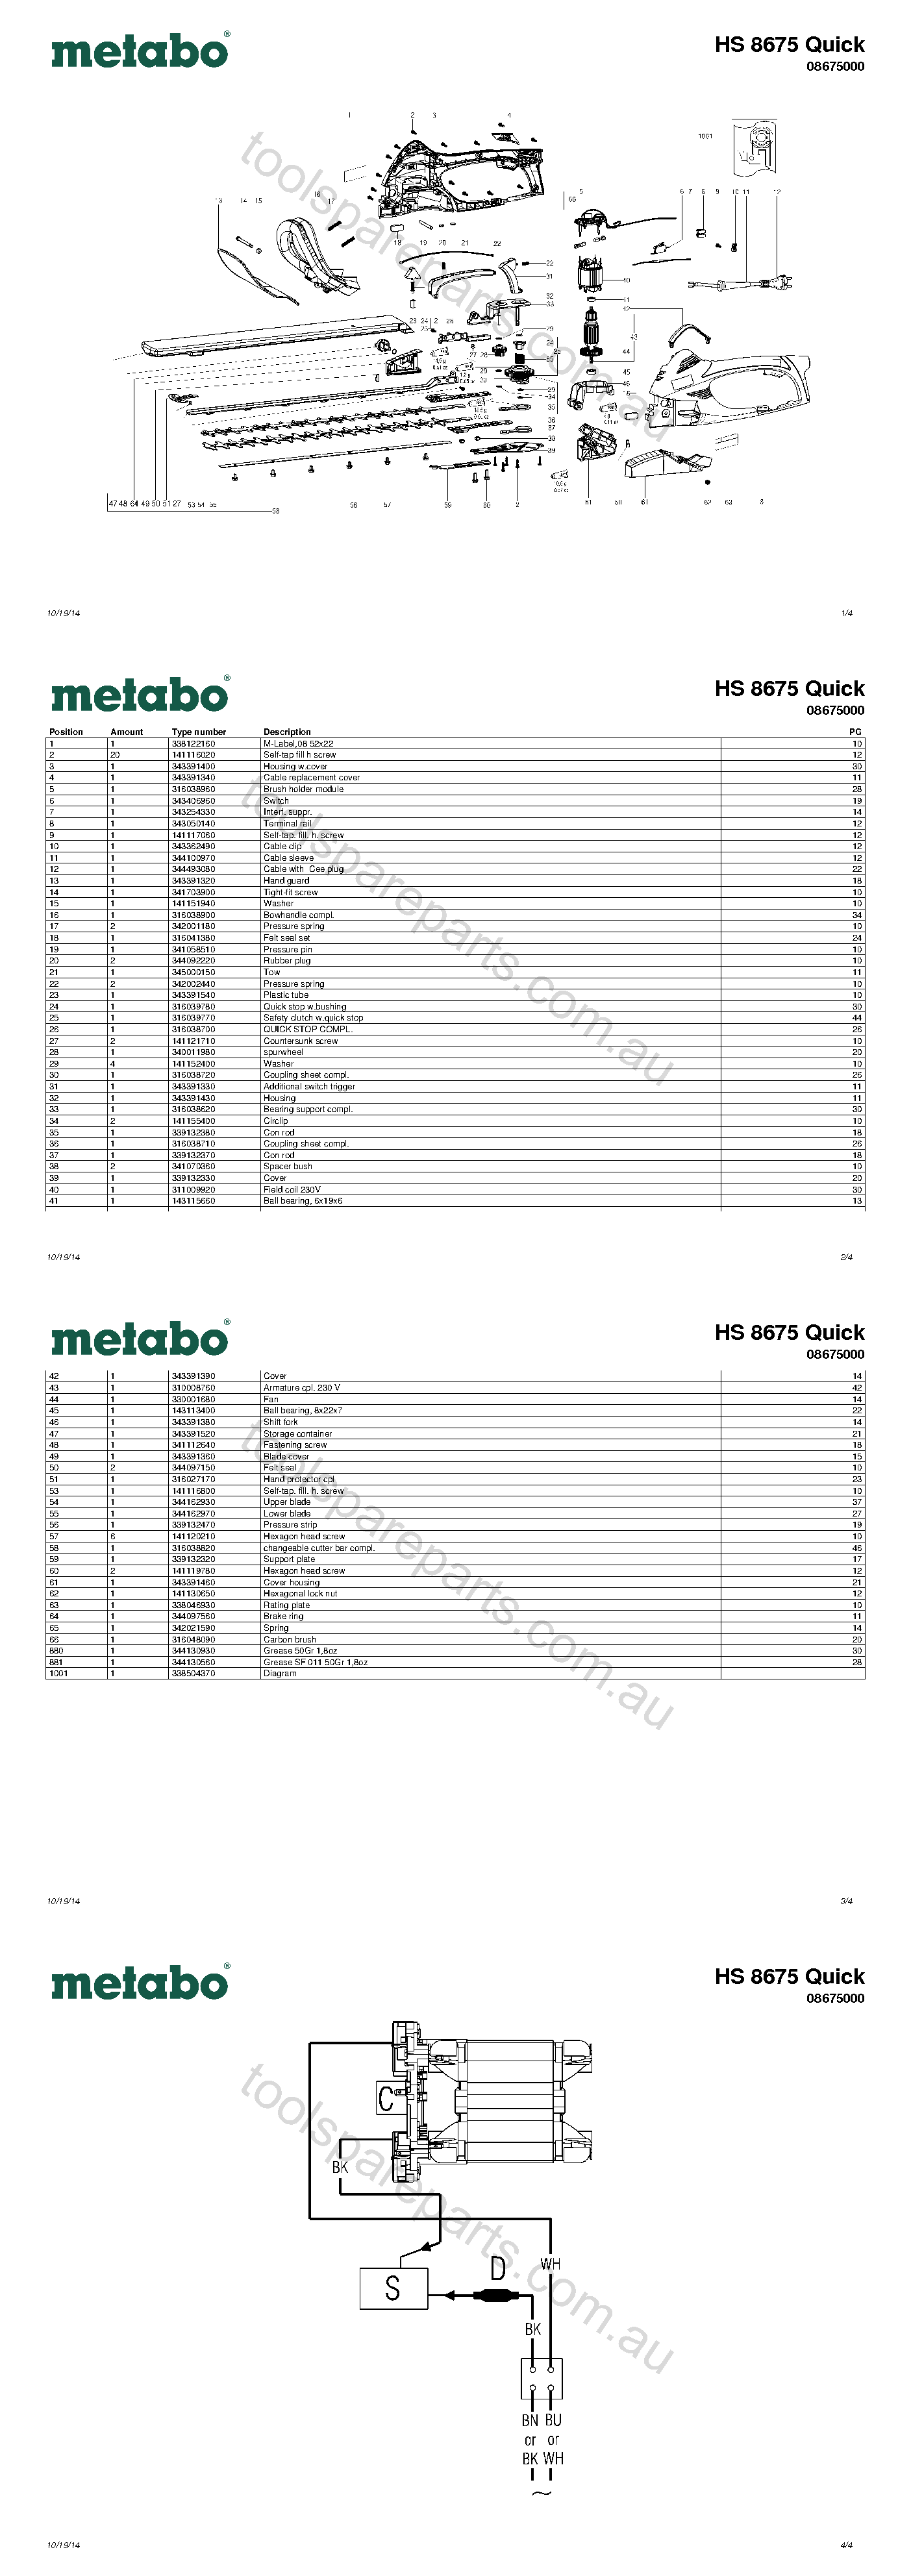 Metabo HS 8675 Quick 08675000  Diagram 1